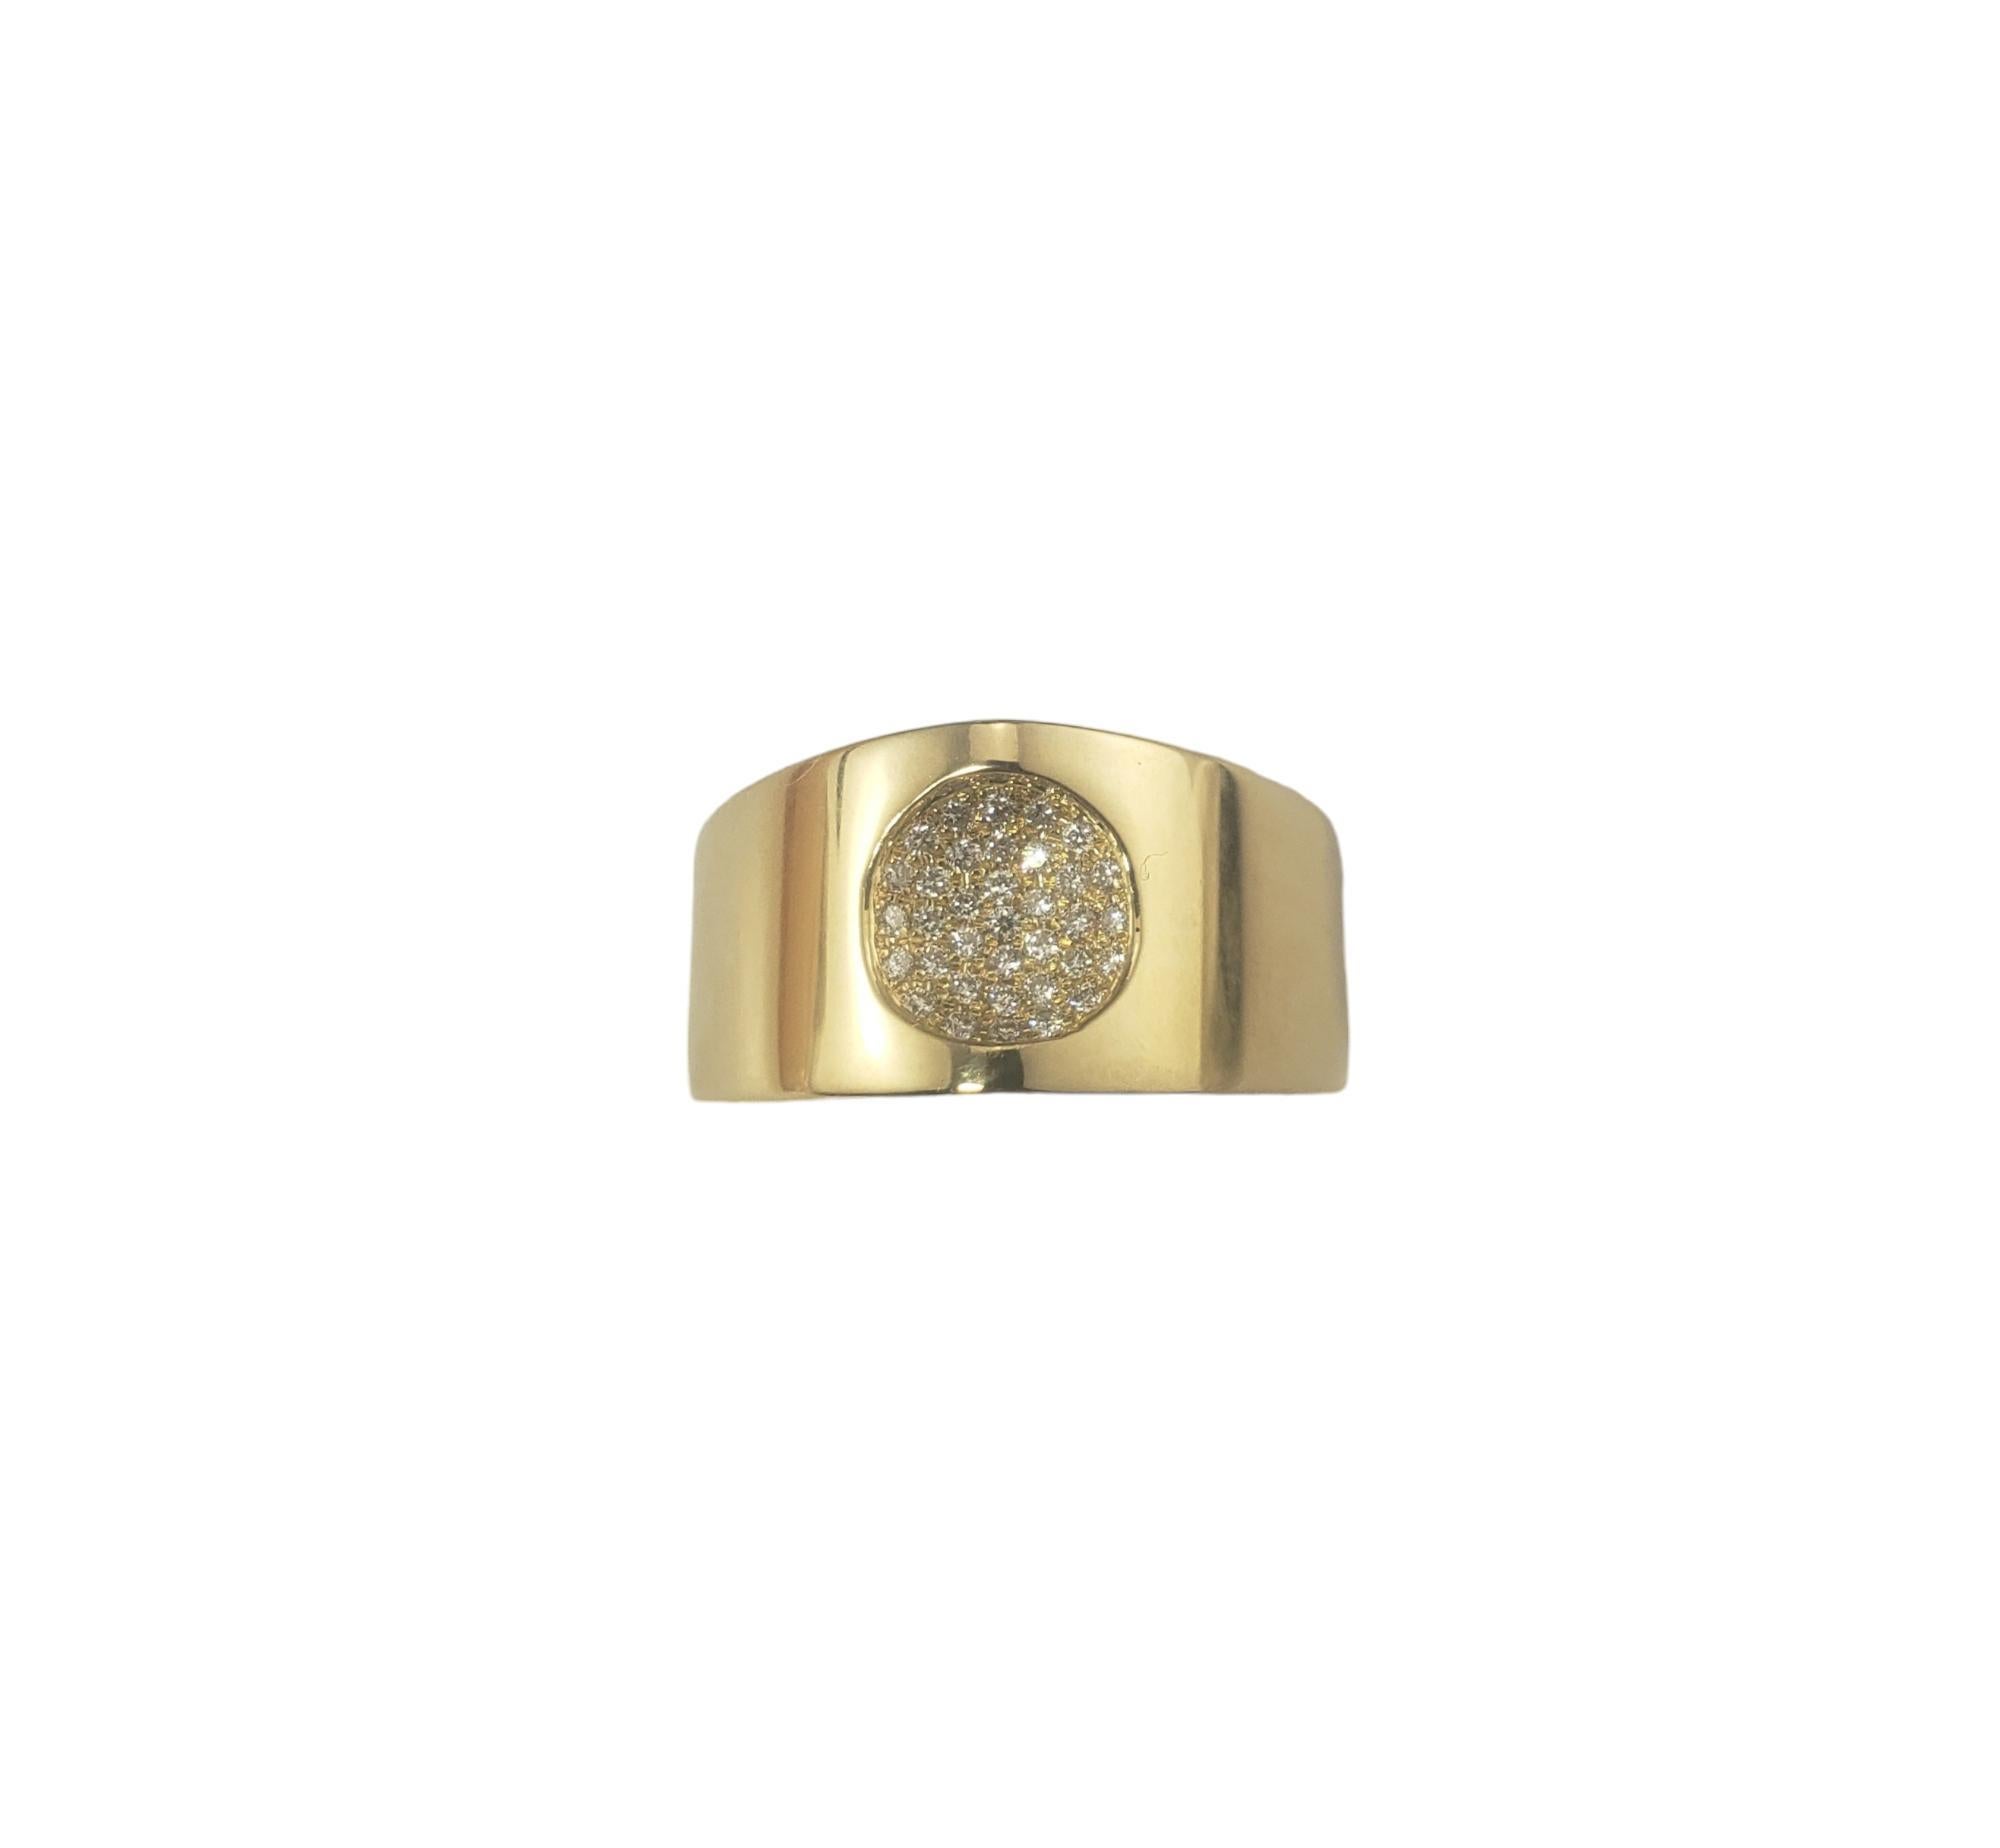 Movado 18 Karat Yellow Gold and Diamond Ring Size 7.5 #16809